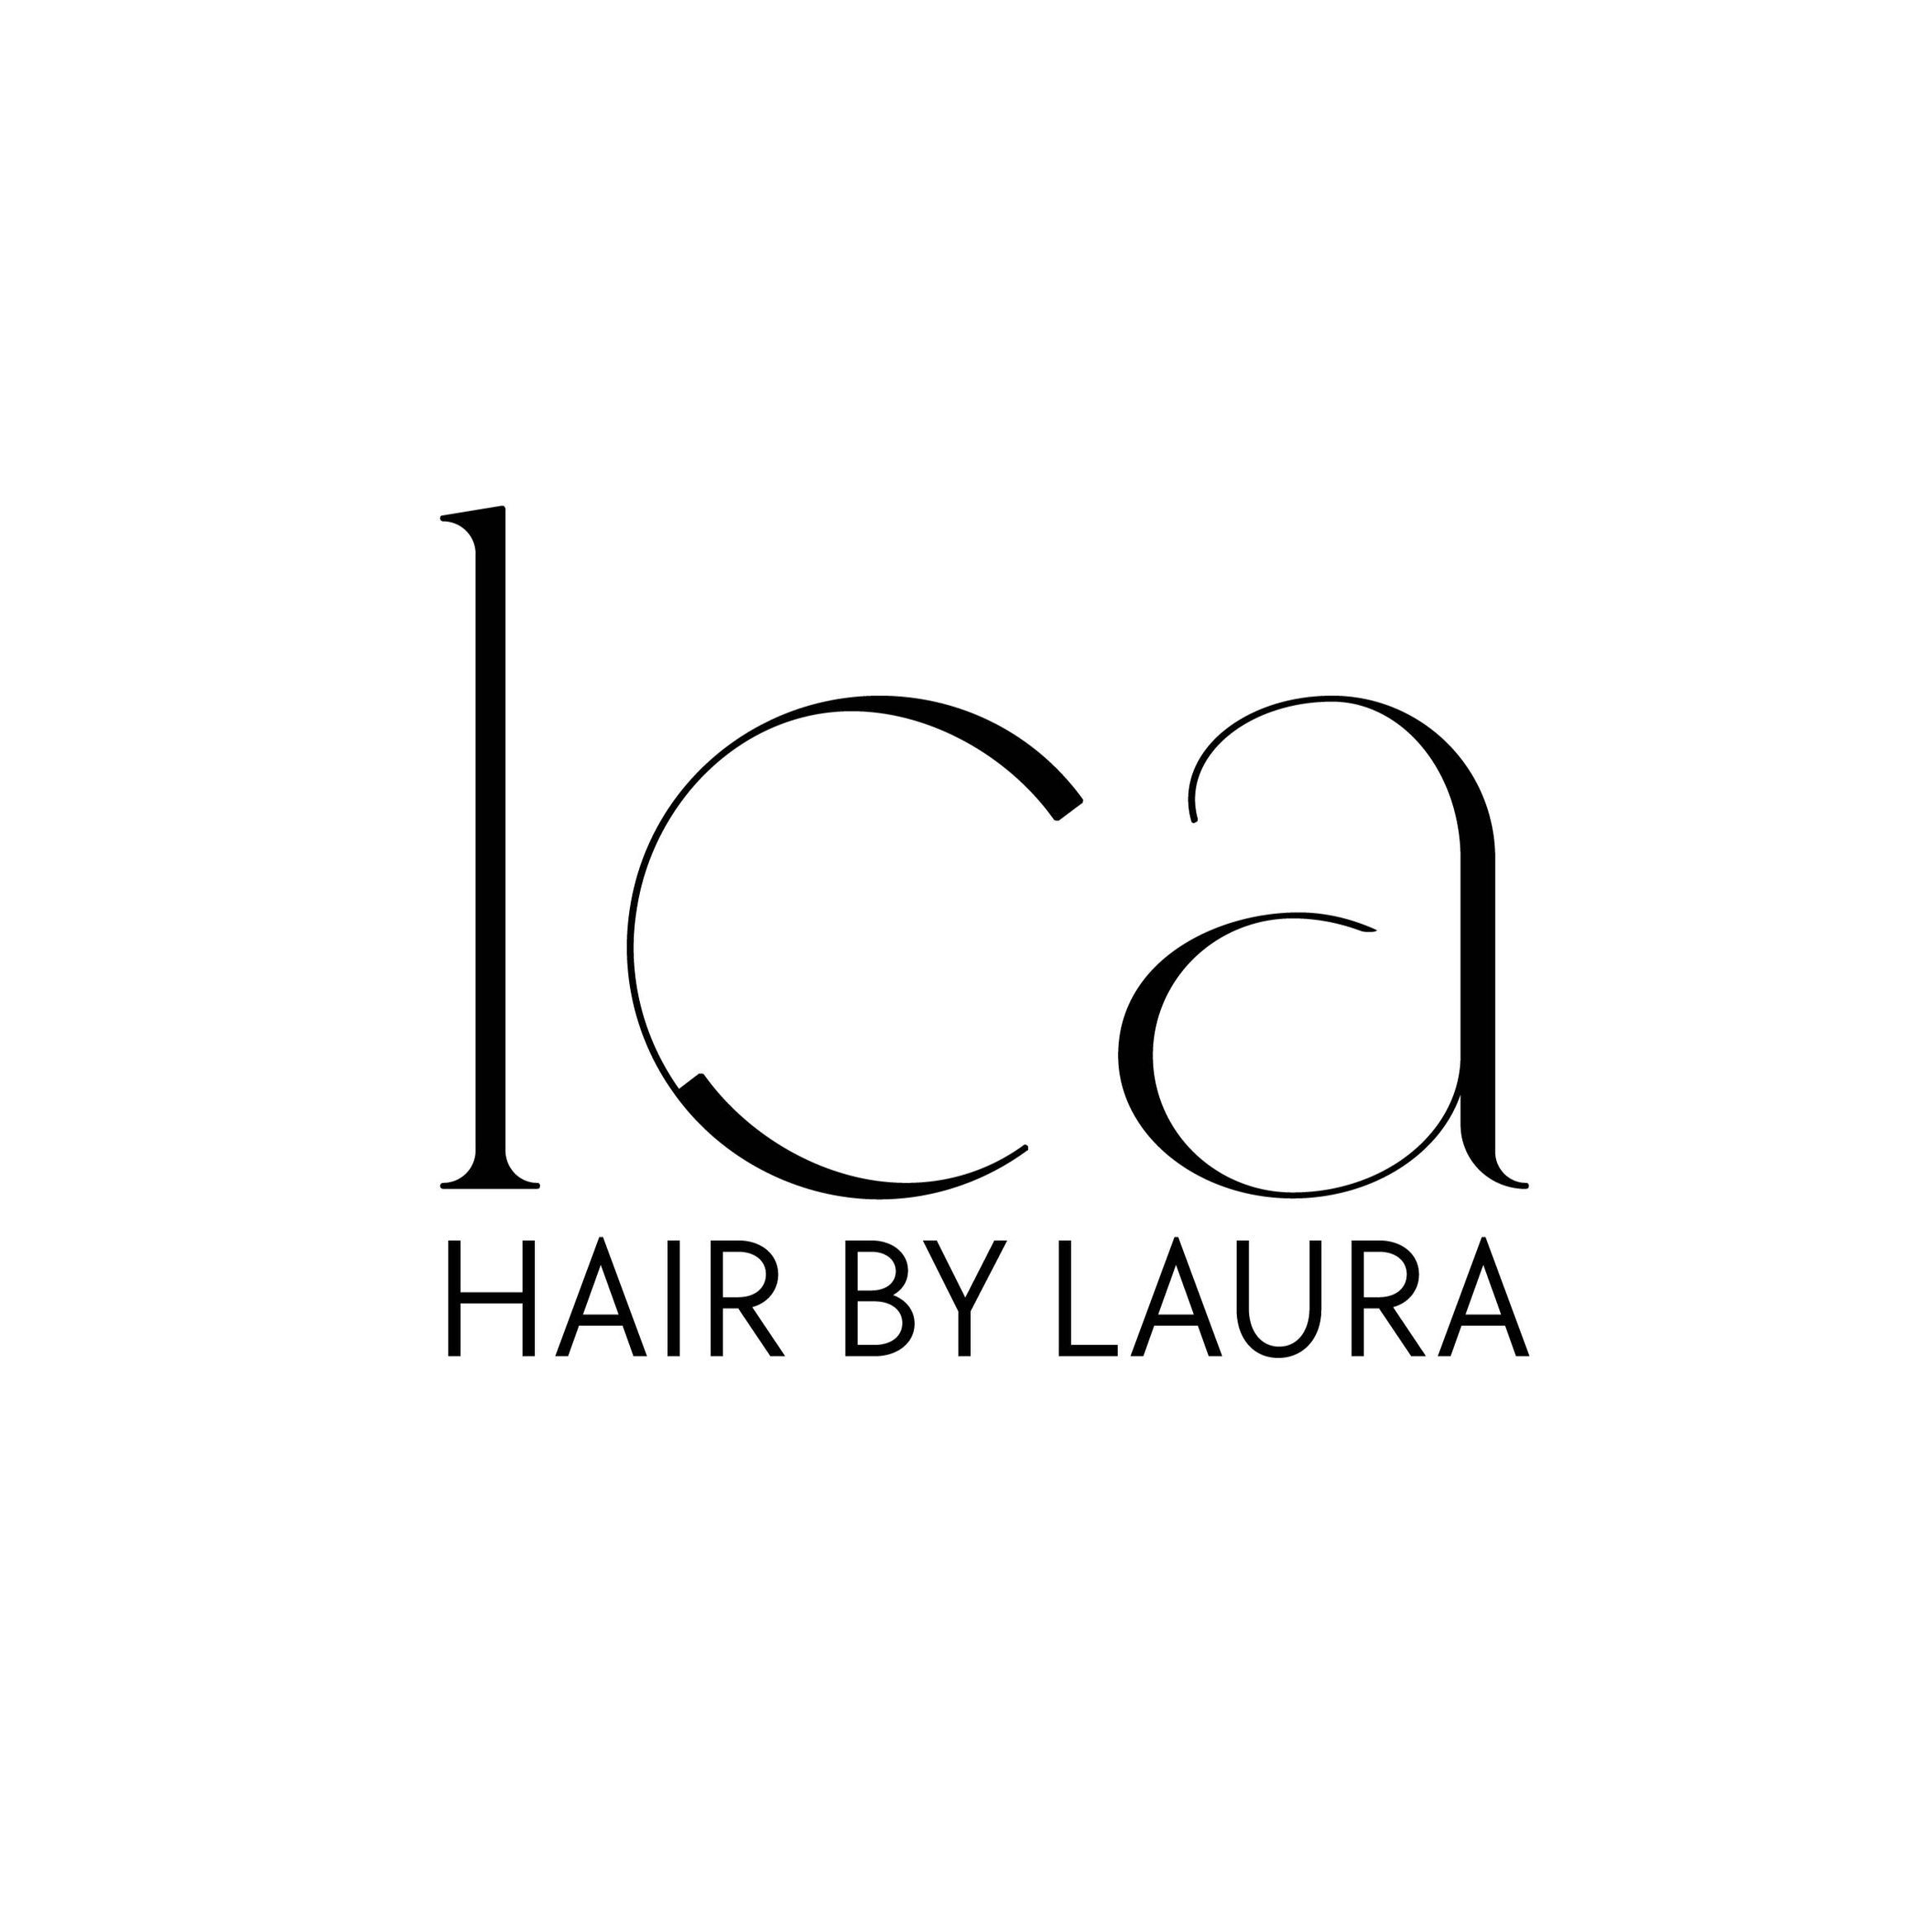 Hair By Laura, KC Hair Extensions, East Street, BS3 4HH, Bristol